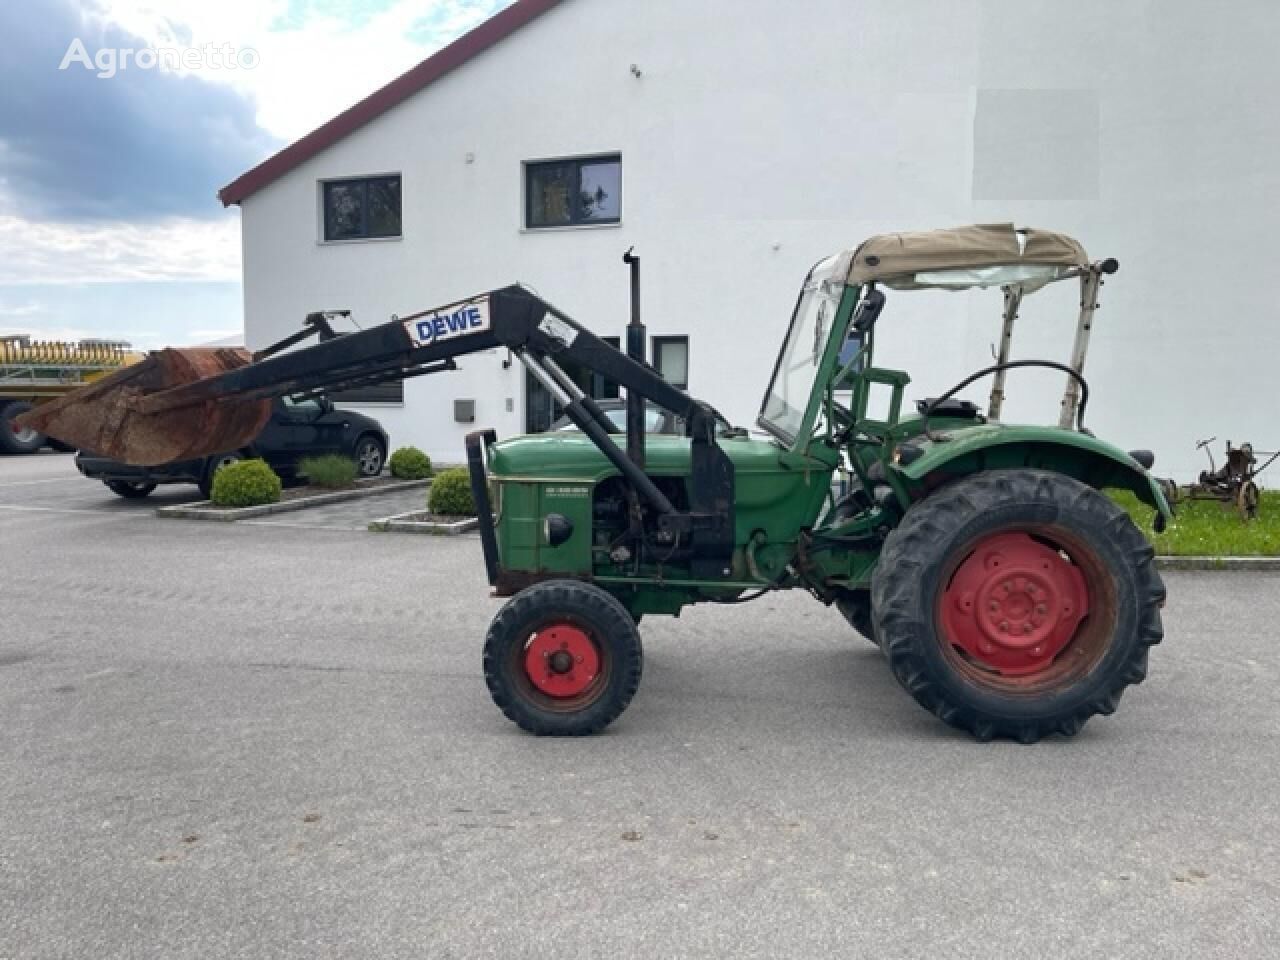 Deutz-Fahr D 4005 wheel tractor